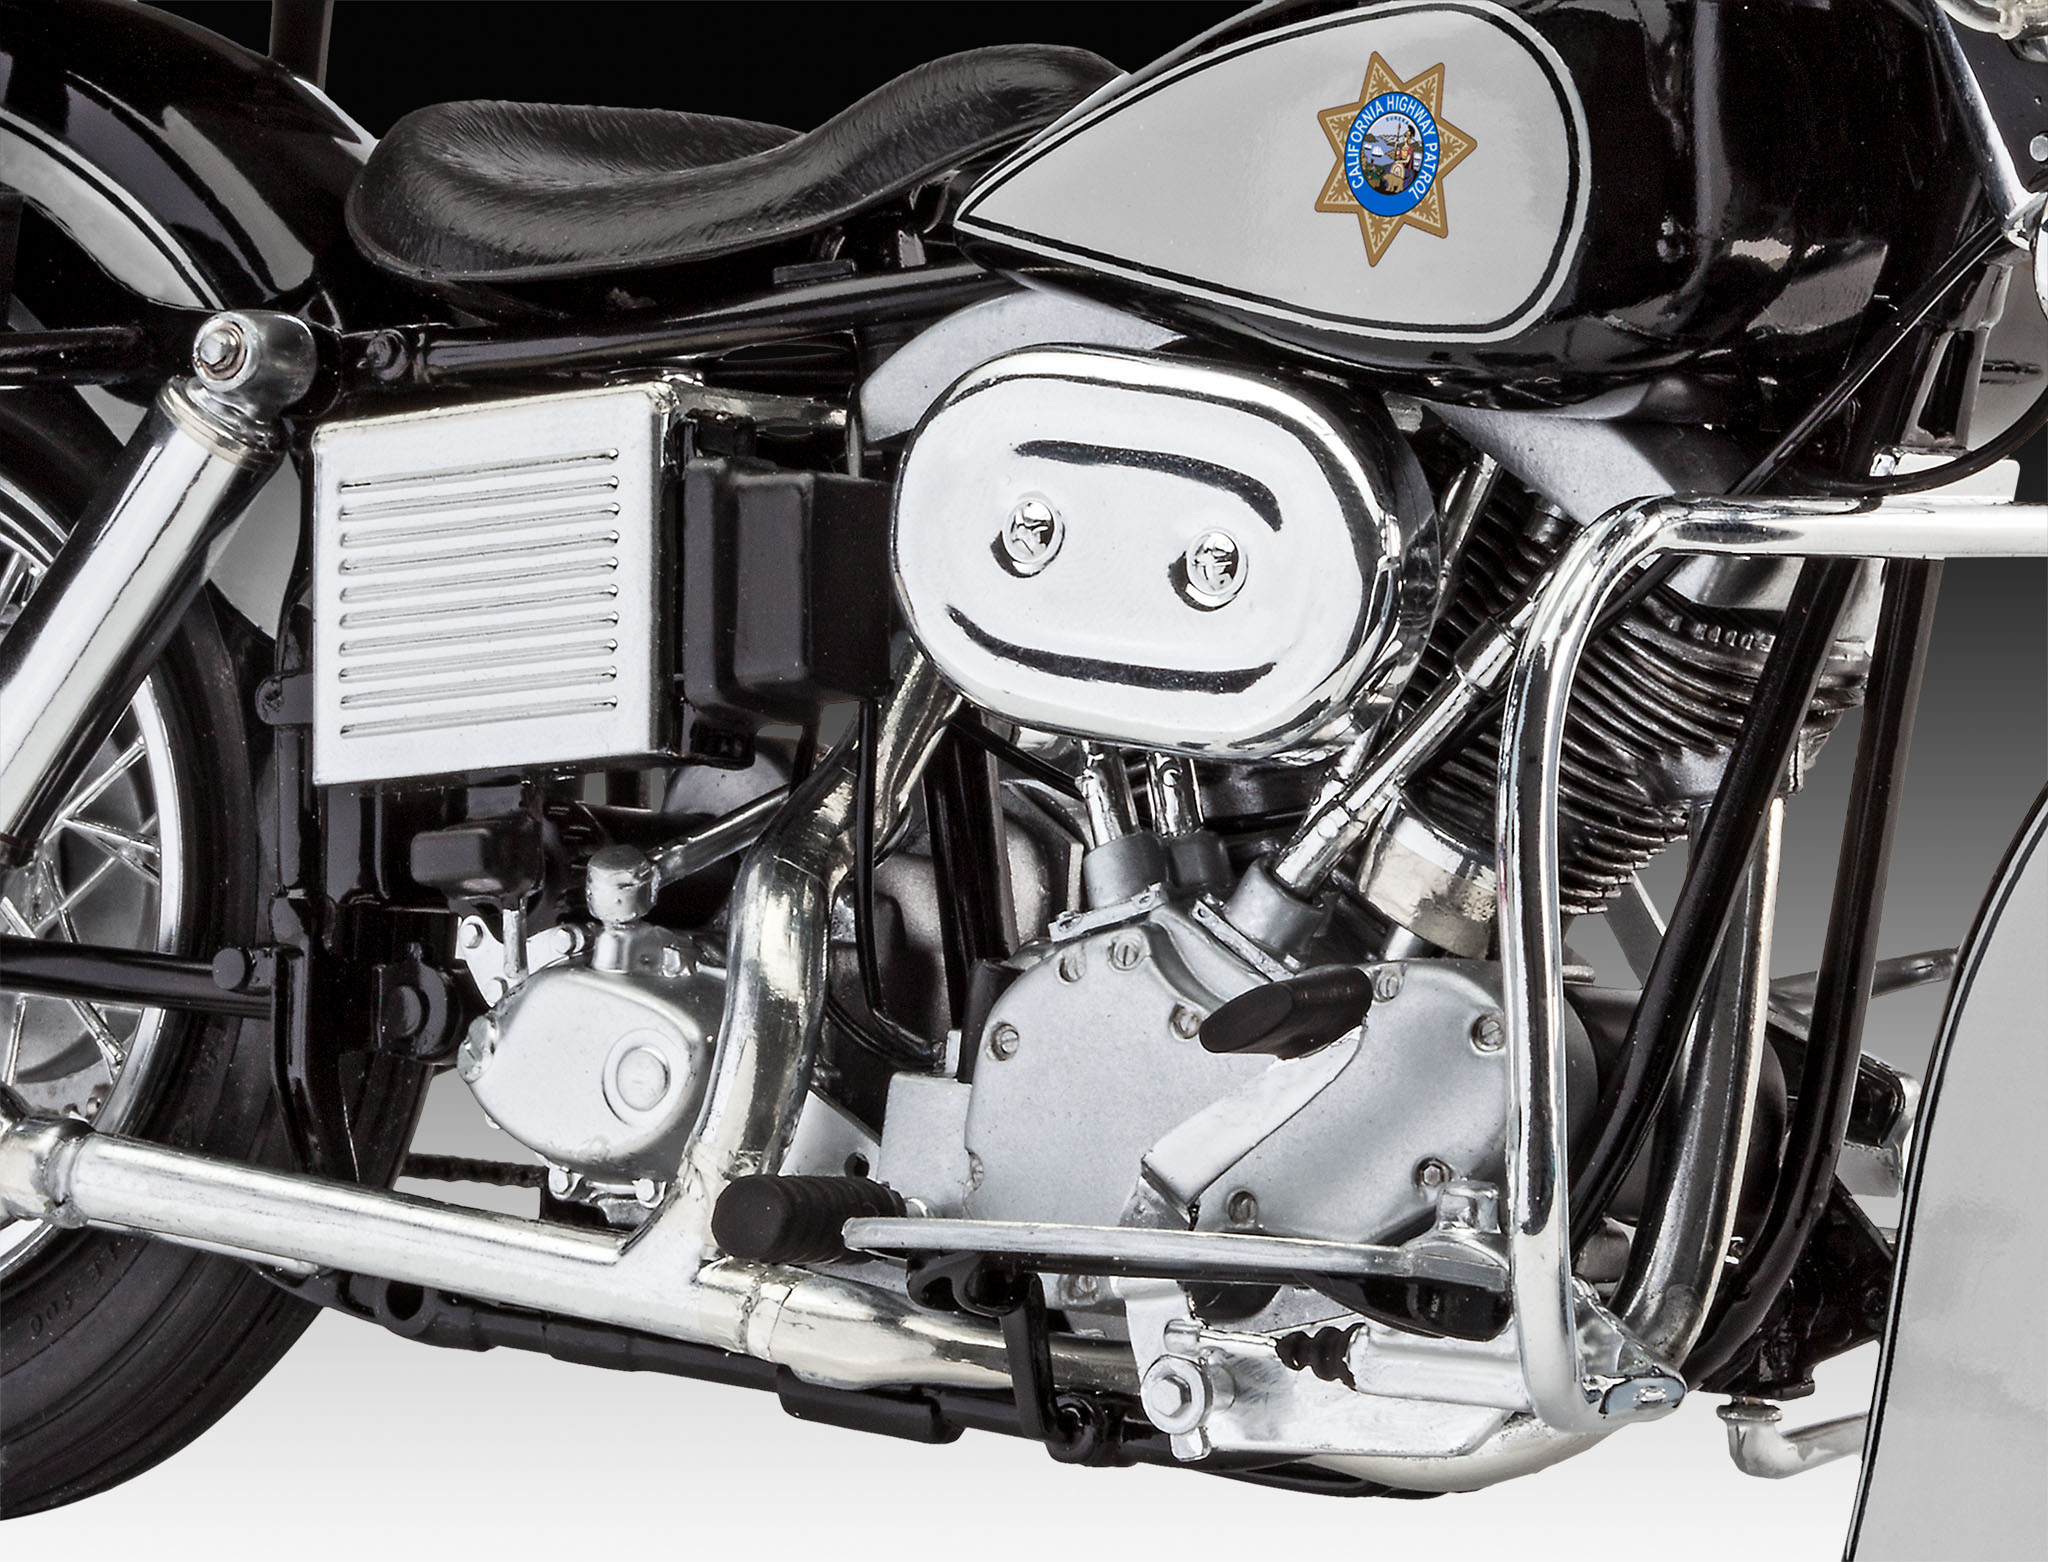 07915 Revell 1:8 Полицейский мотоцикл США # 4 hobbyplus.ru